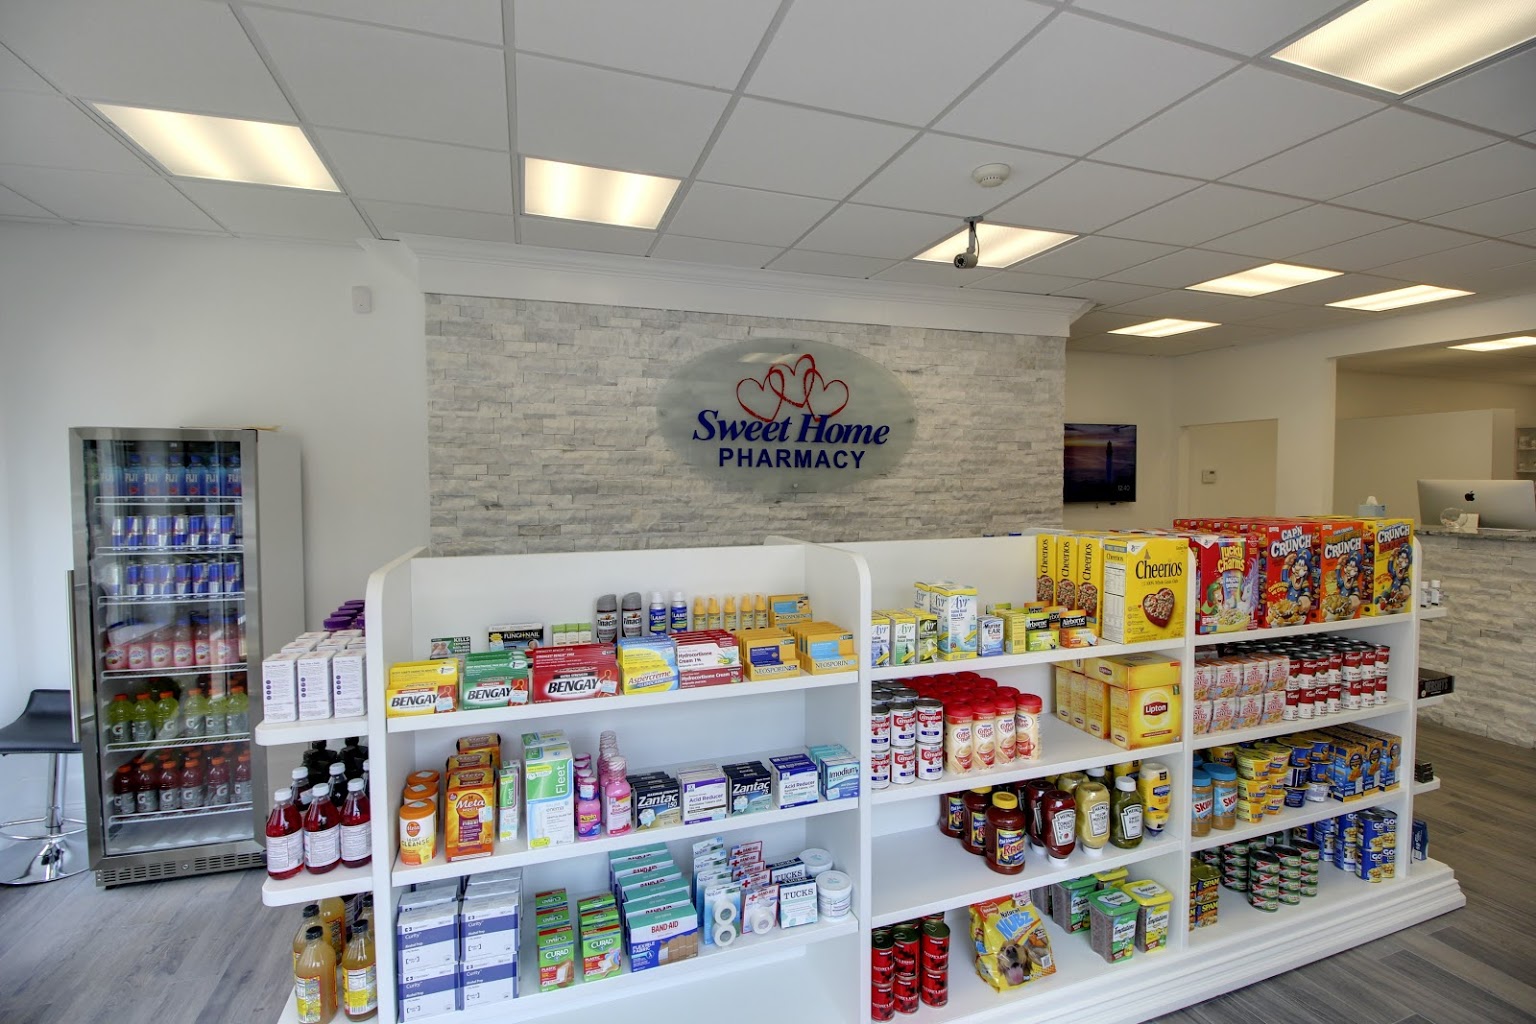 Sweet Home Pharmacy in Yeadon, PA retail goods